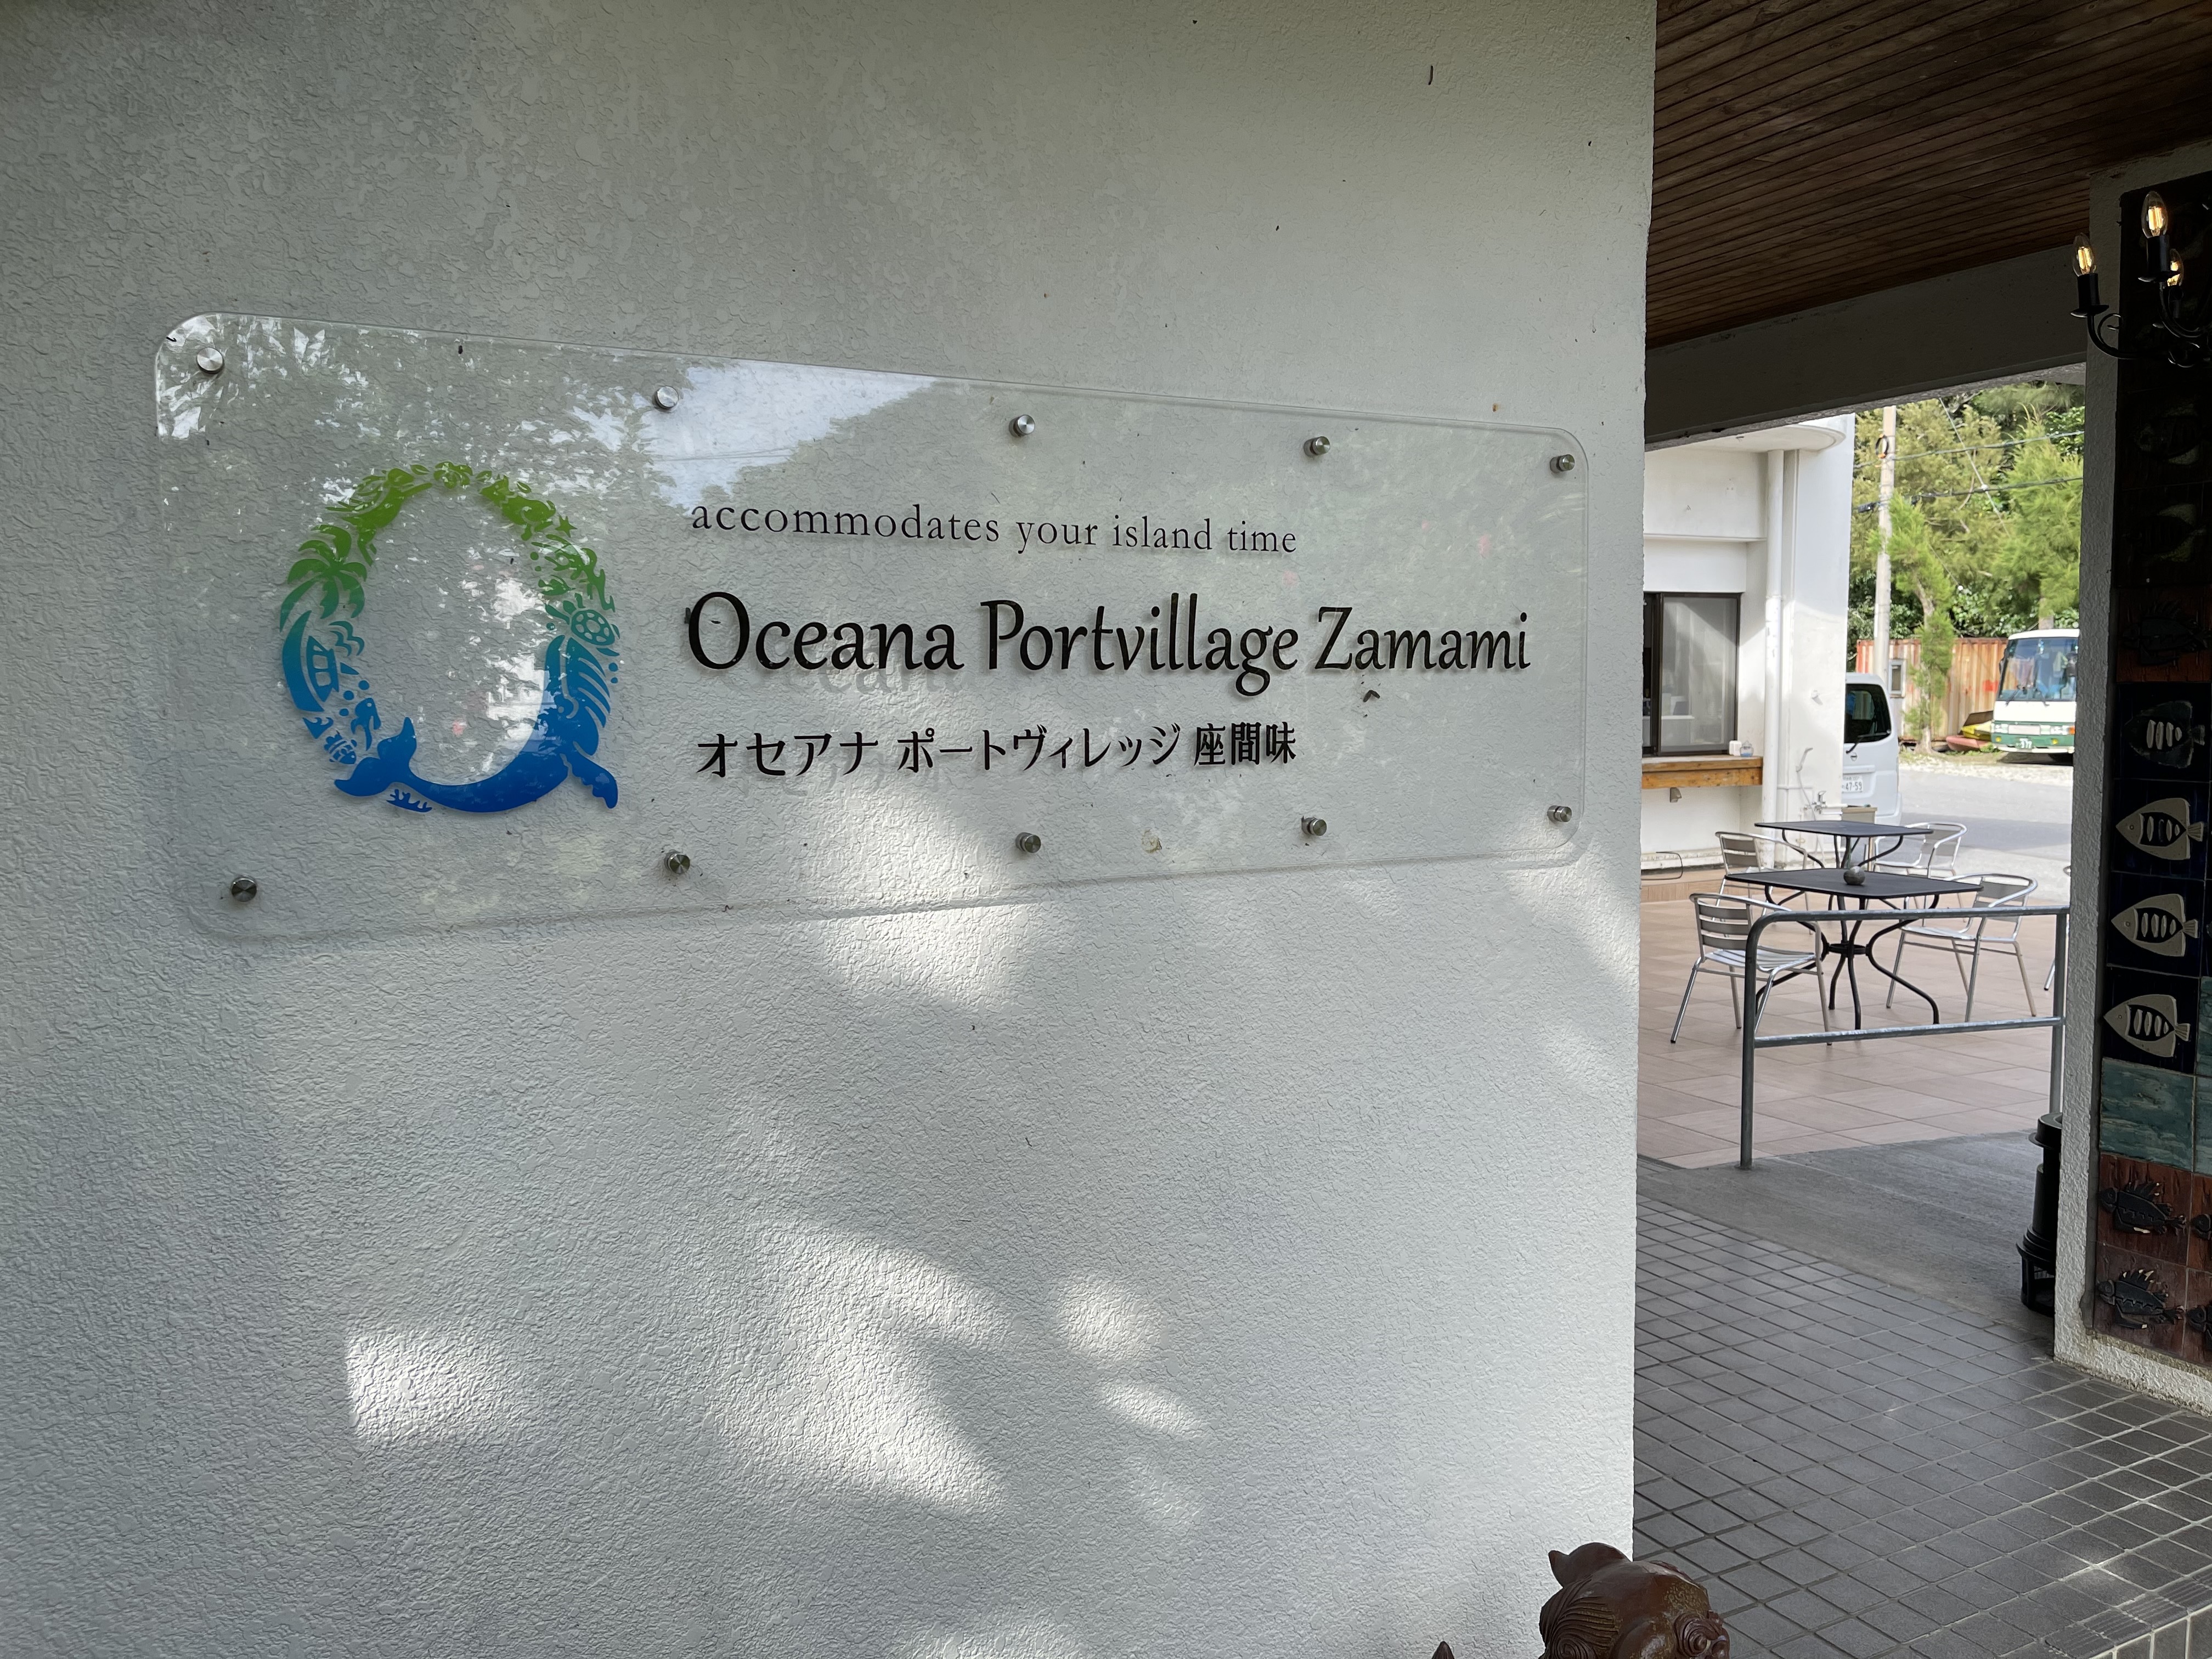 Oceana Portvillage Zamami (Zamamijima)